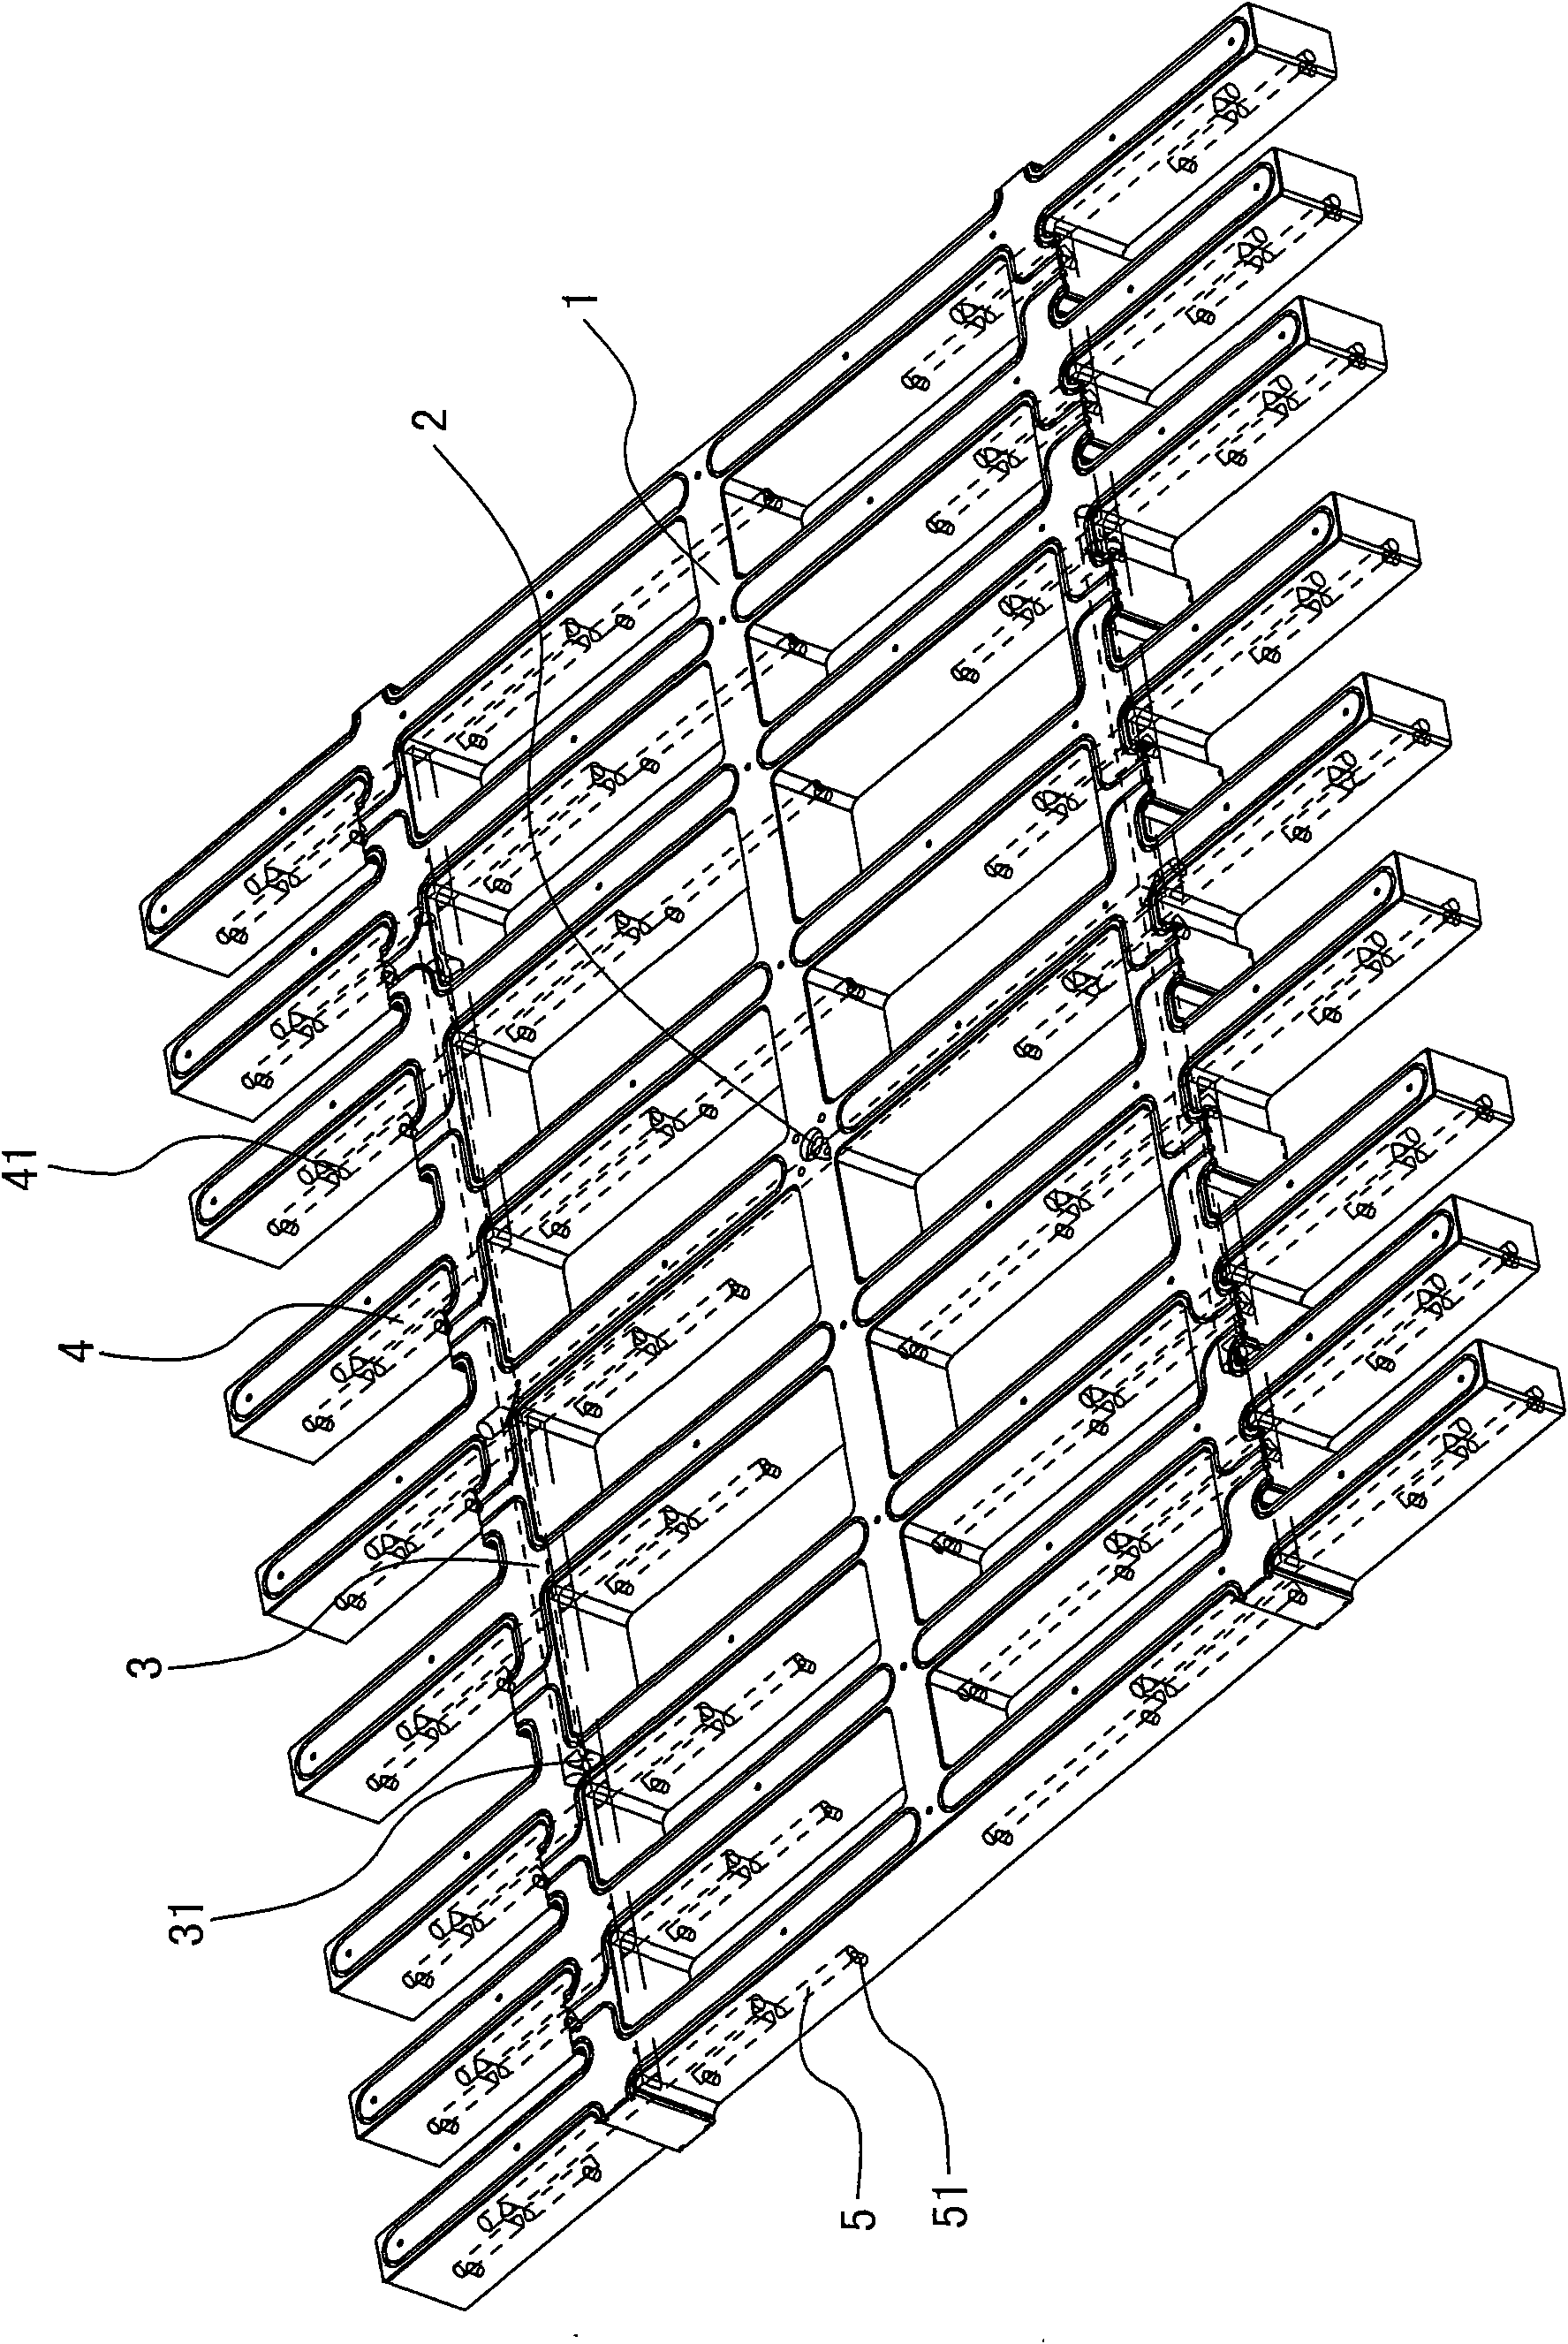 Three-layer divided-flow hot runner rack